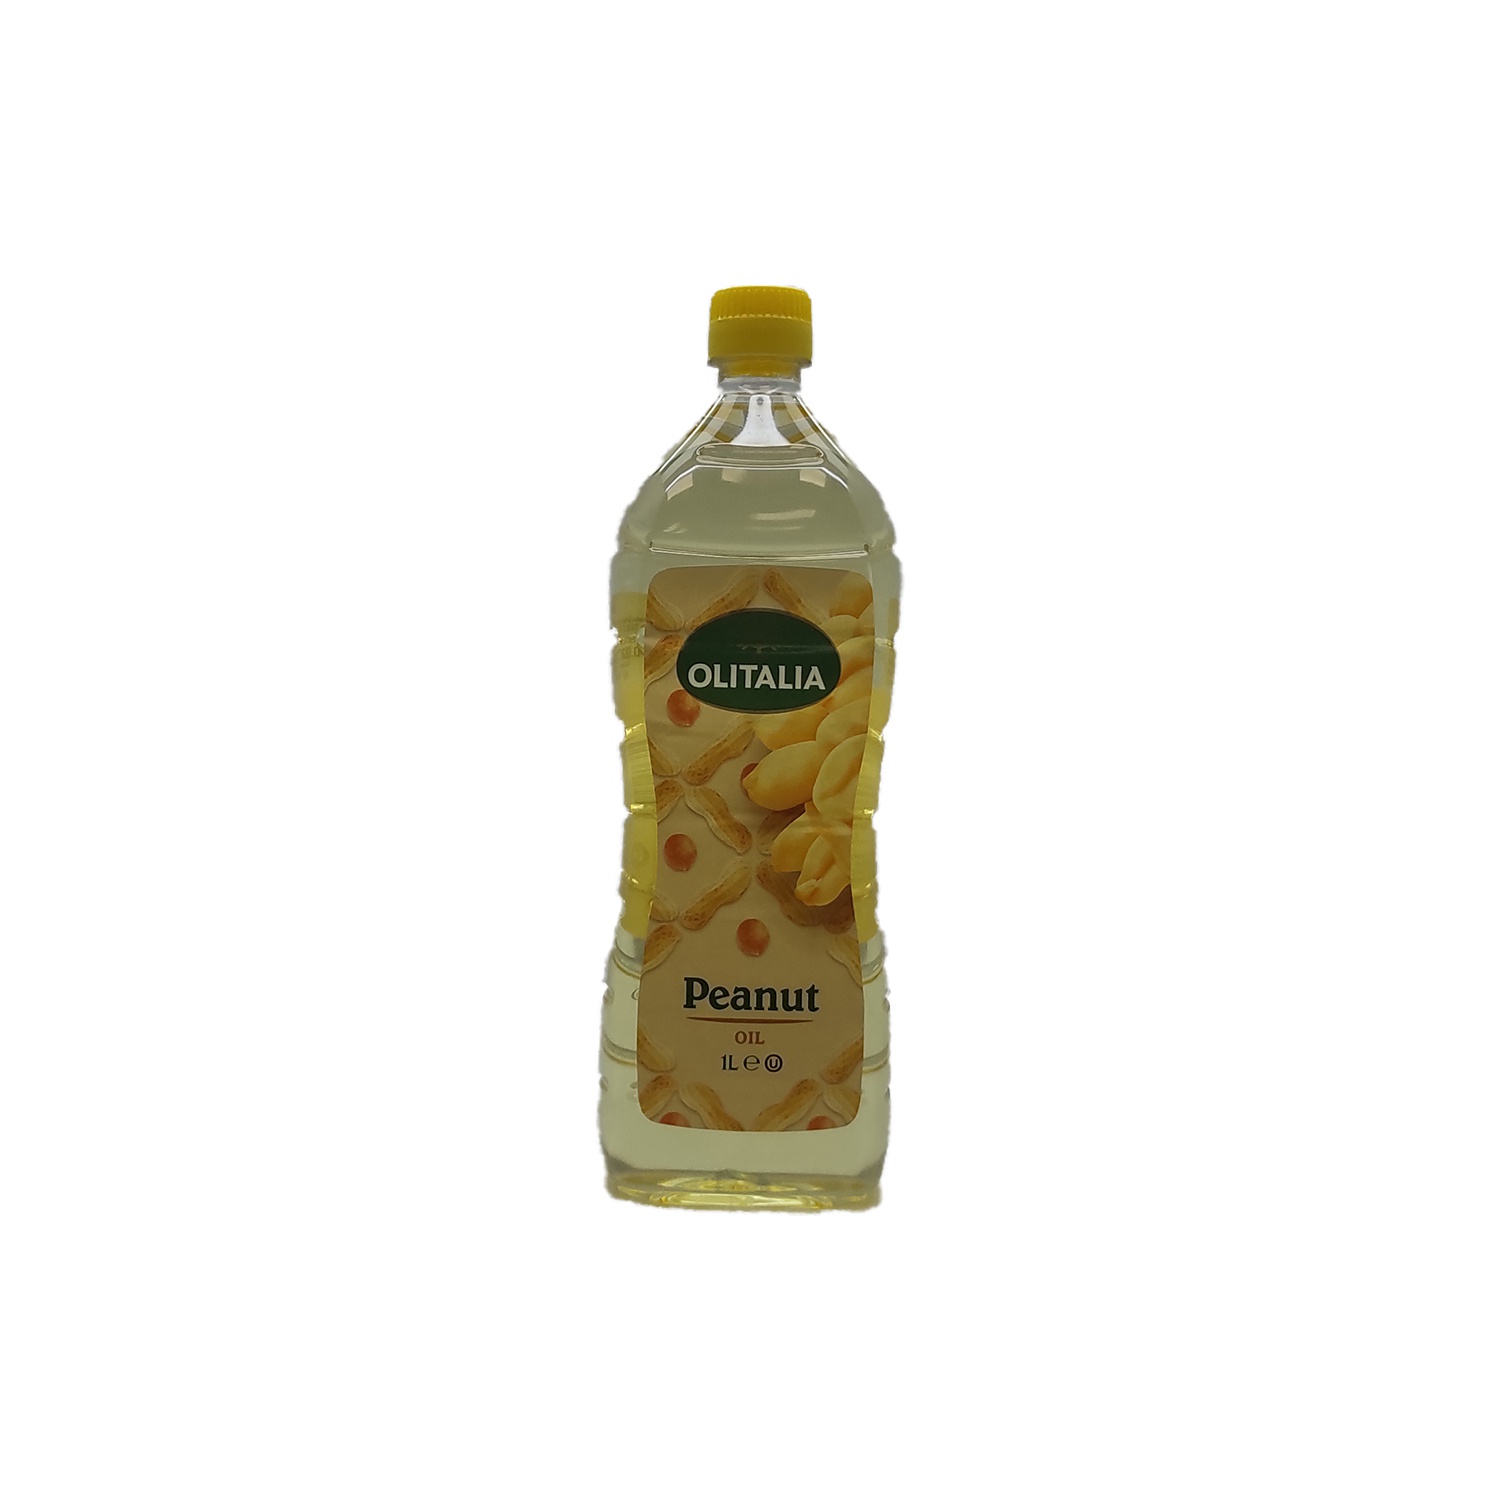 Olitalia Peanut Oil 1L - OLITALIA - Oil / Fat - in Sri Lanka